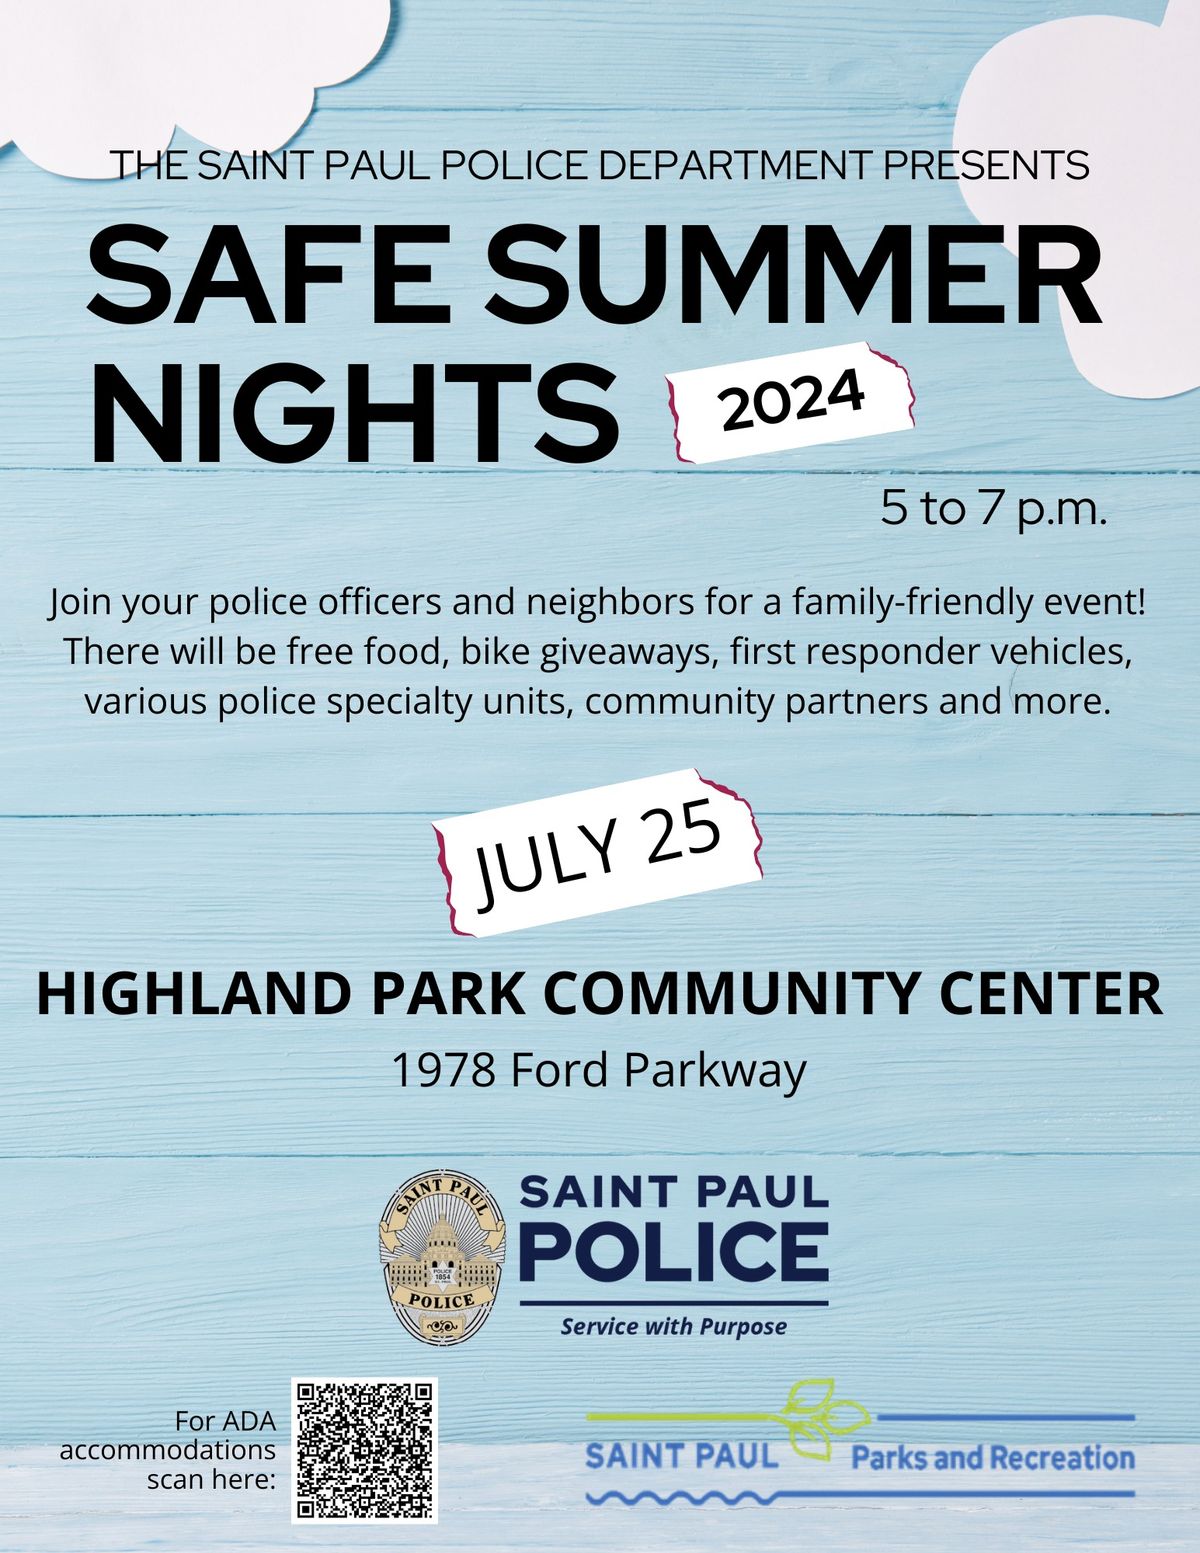 Safe Summer Nights (Highland Park Community Center)